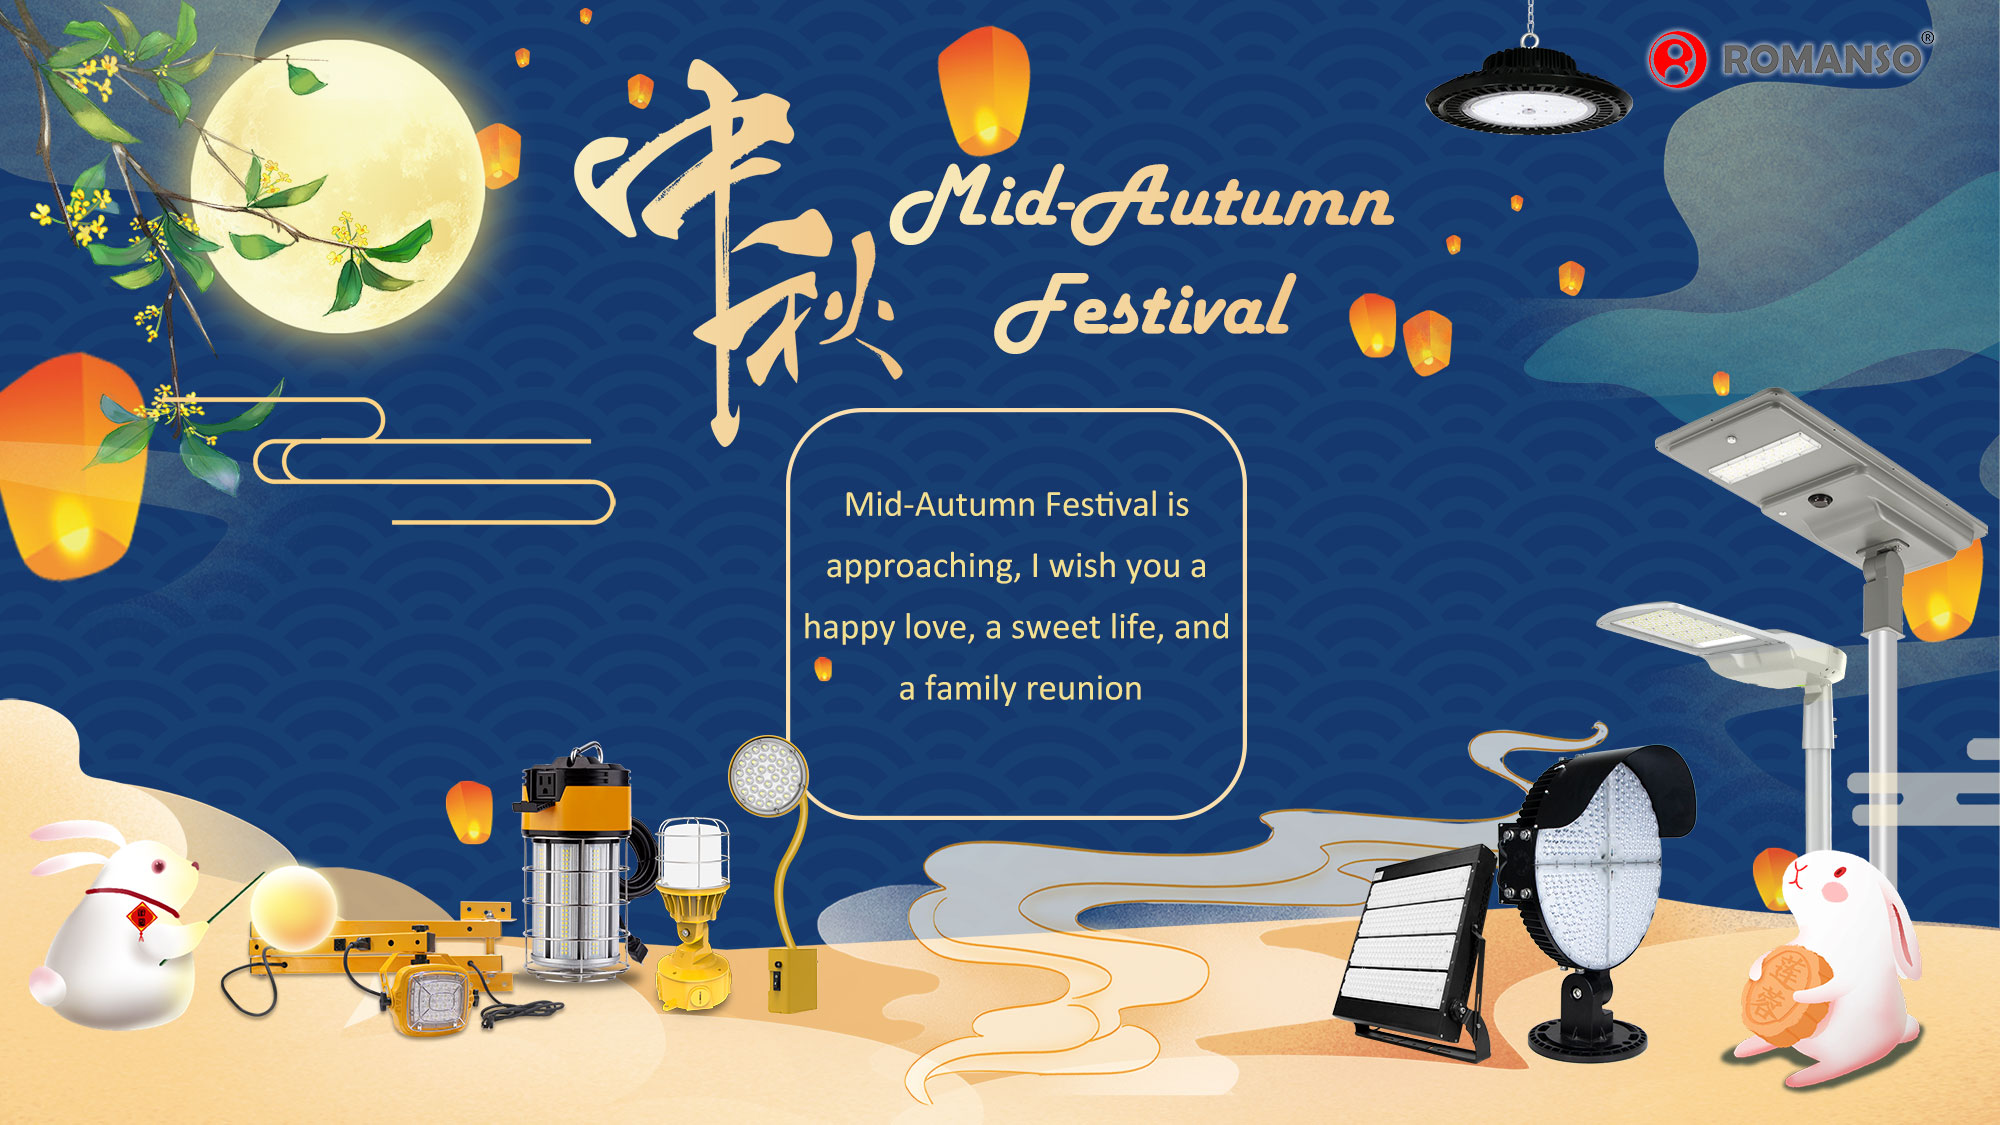 Happy Mid-Autumn Festival 2021